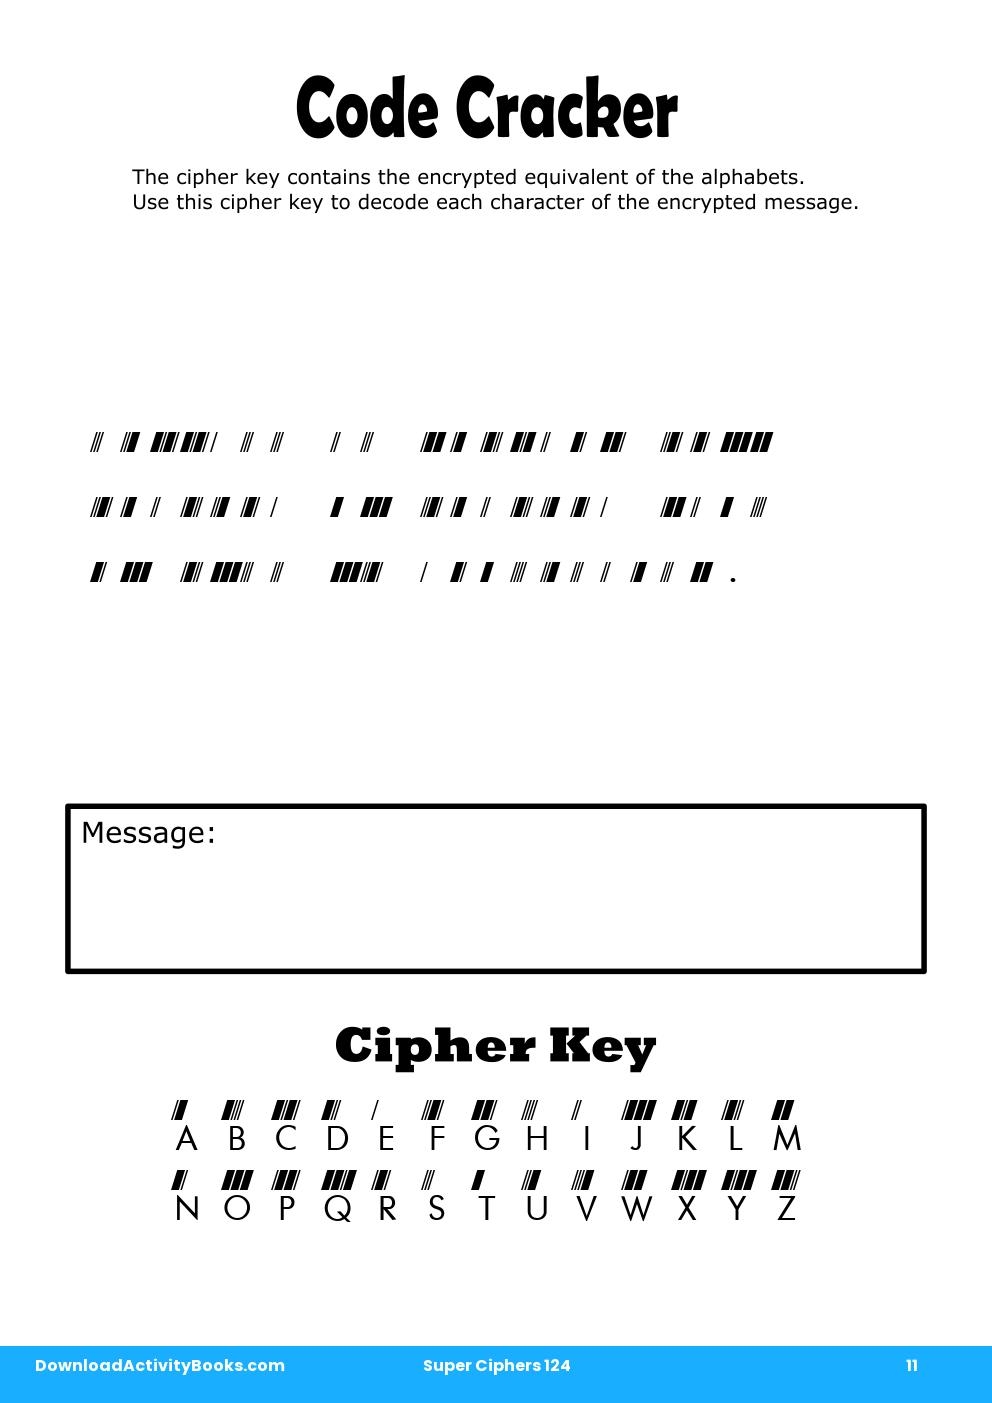 Code Cracker in Super Ciphers 124